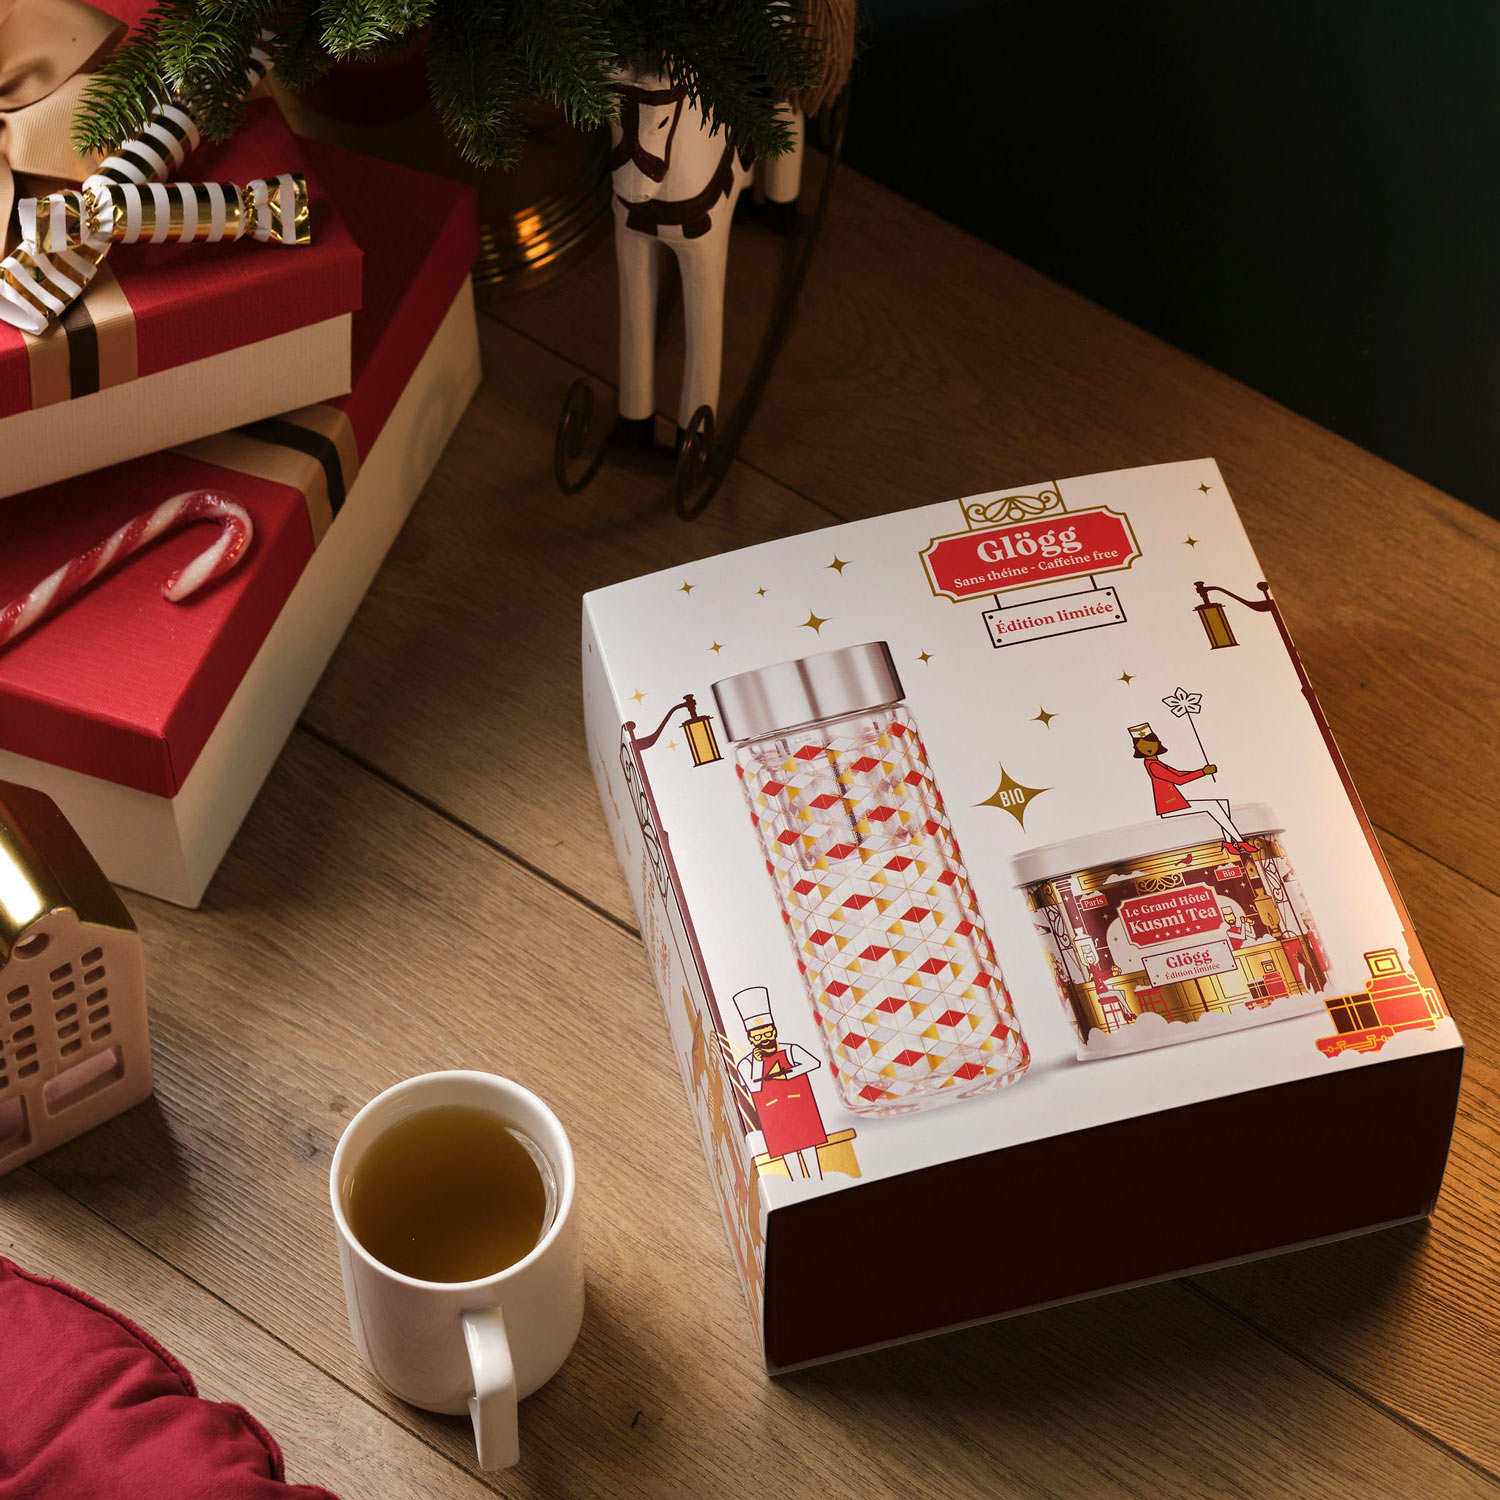 The Collection gift set (Organic) - Kusmi Tea